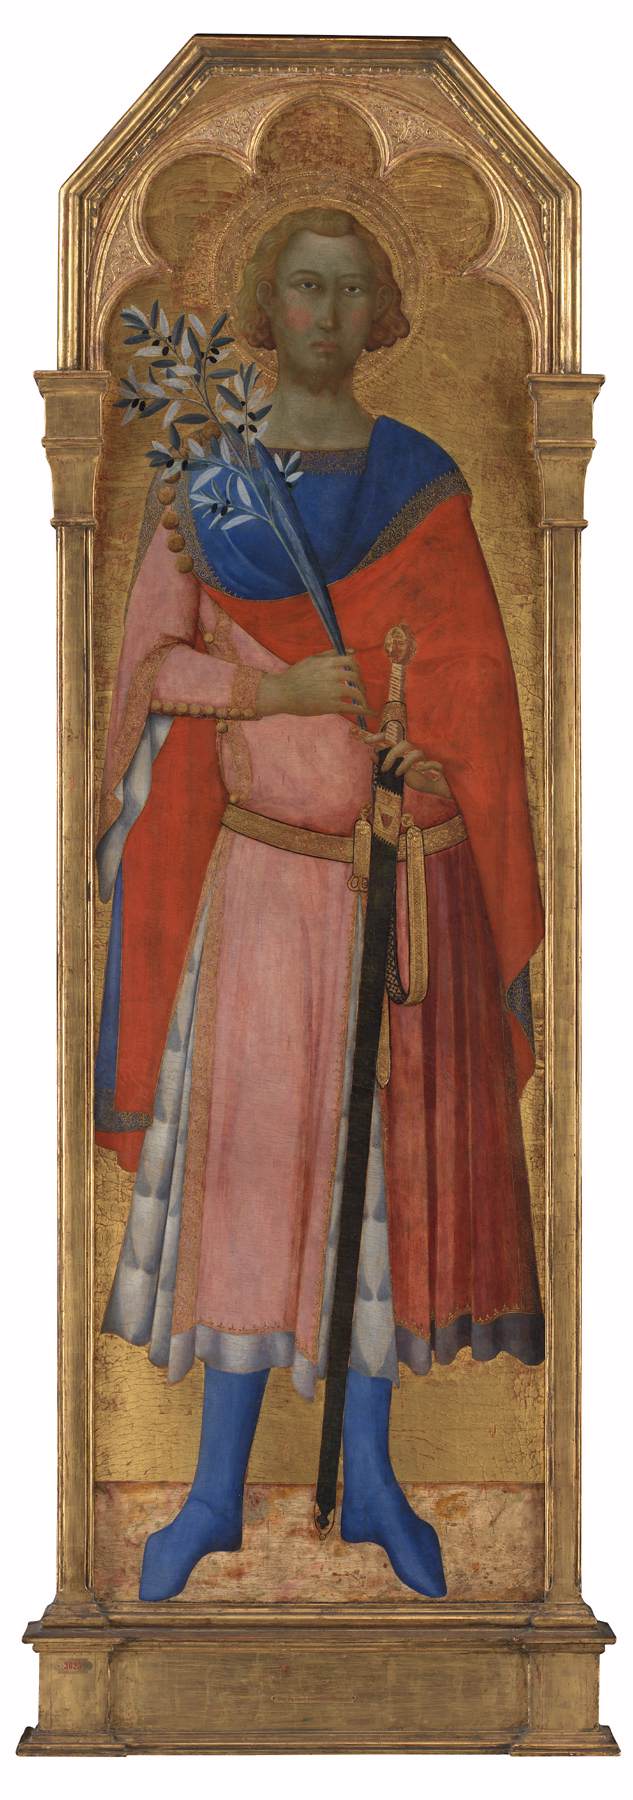 Saint Vittore of Siena